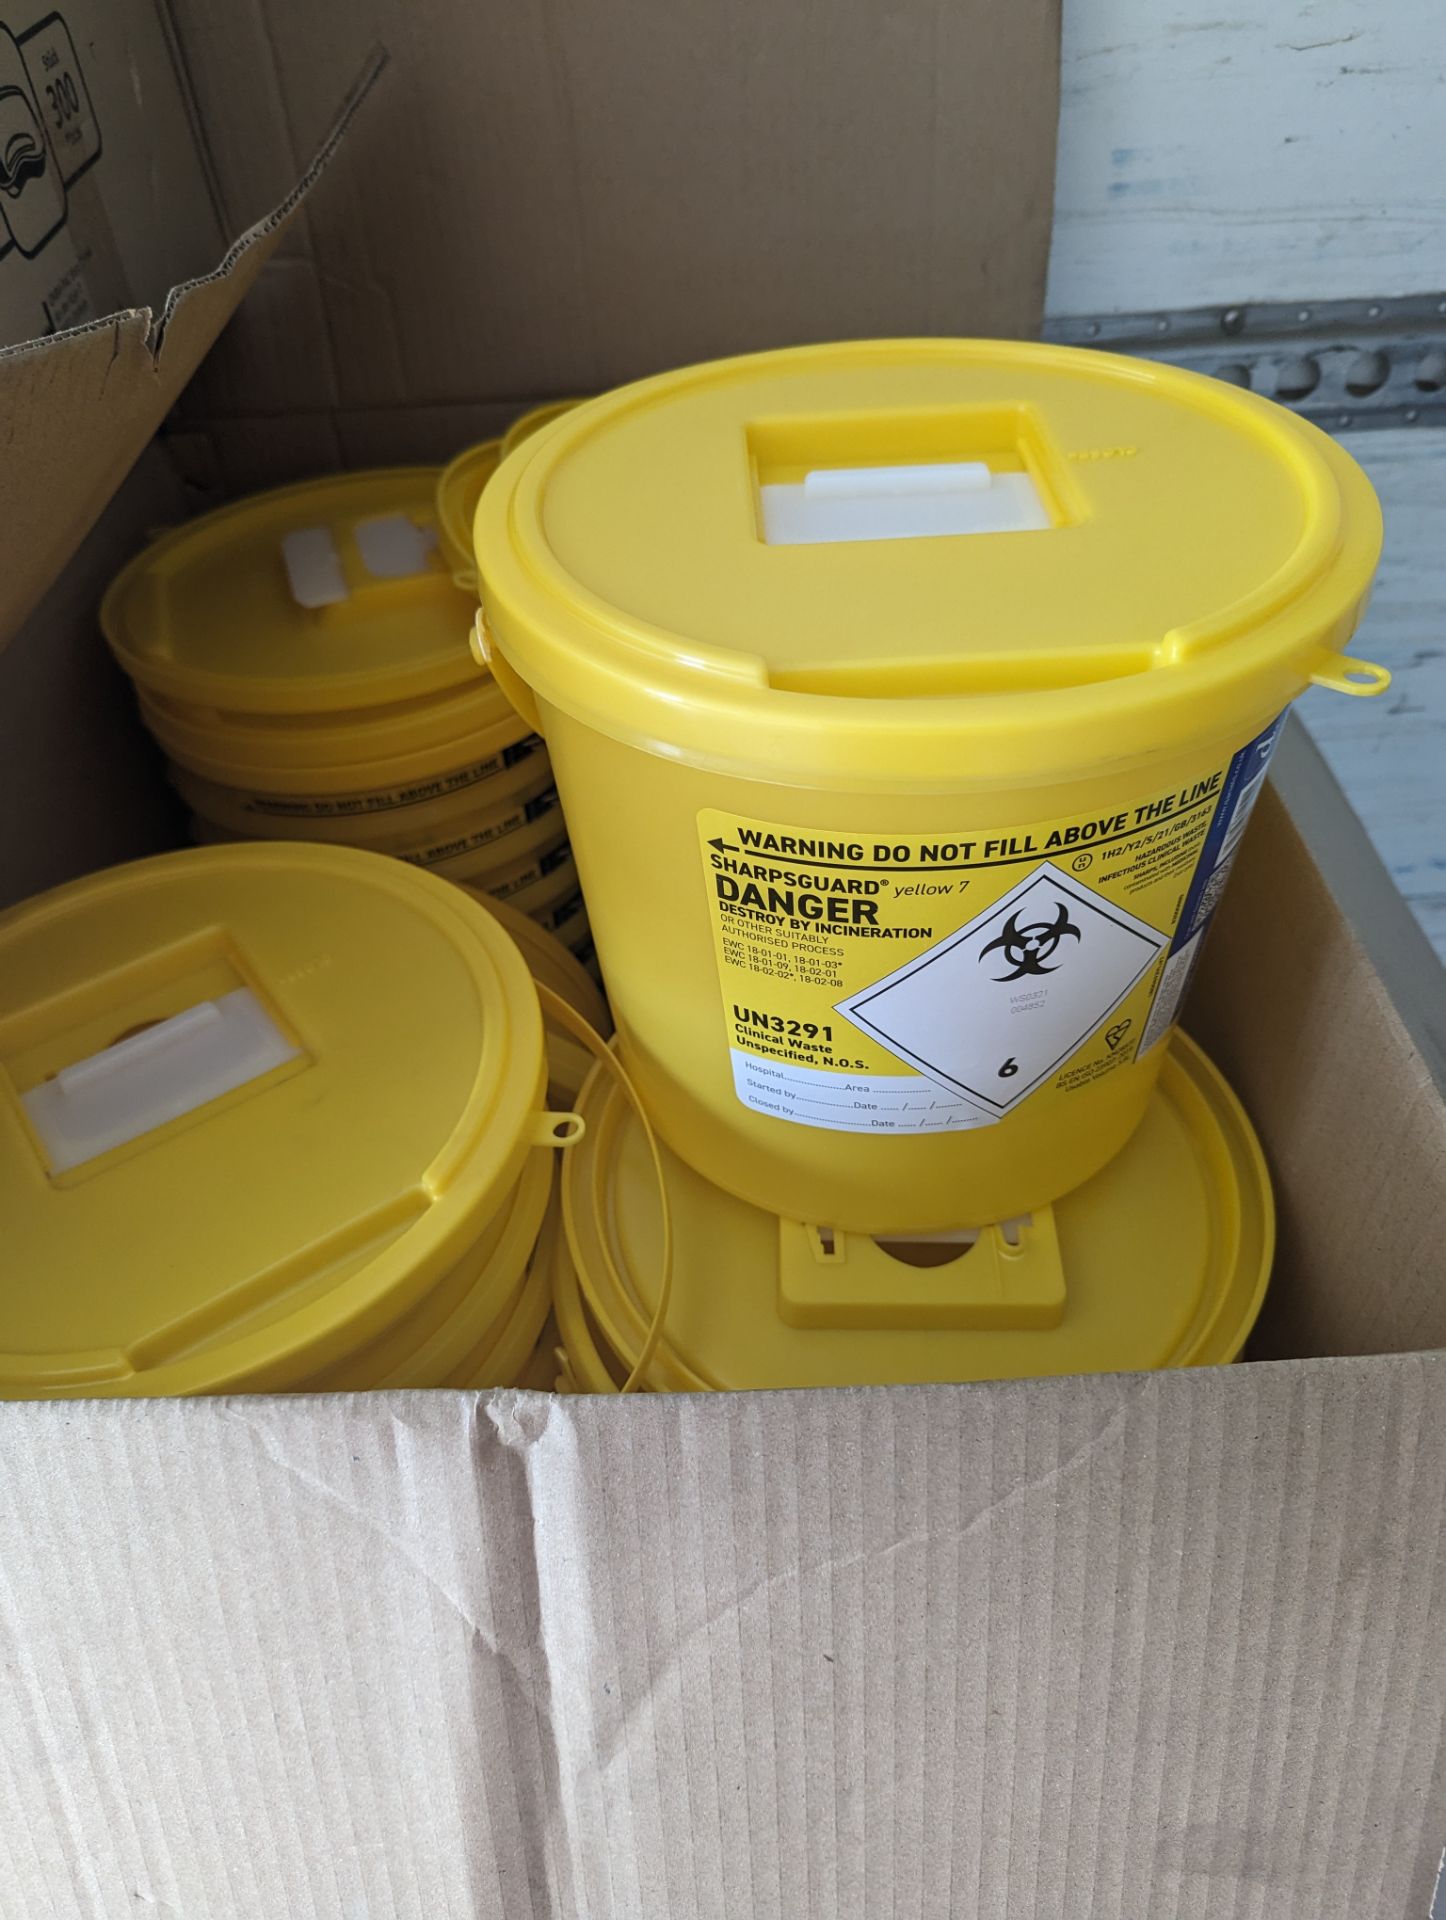 40 x Clinical Hazardous Waste Bins - Image 2 of 2